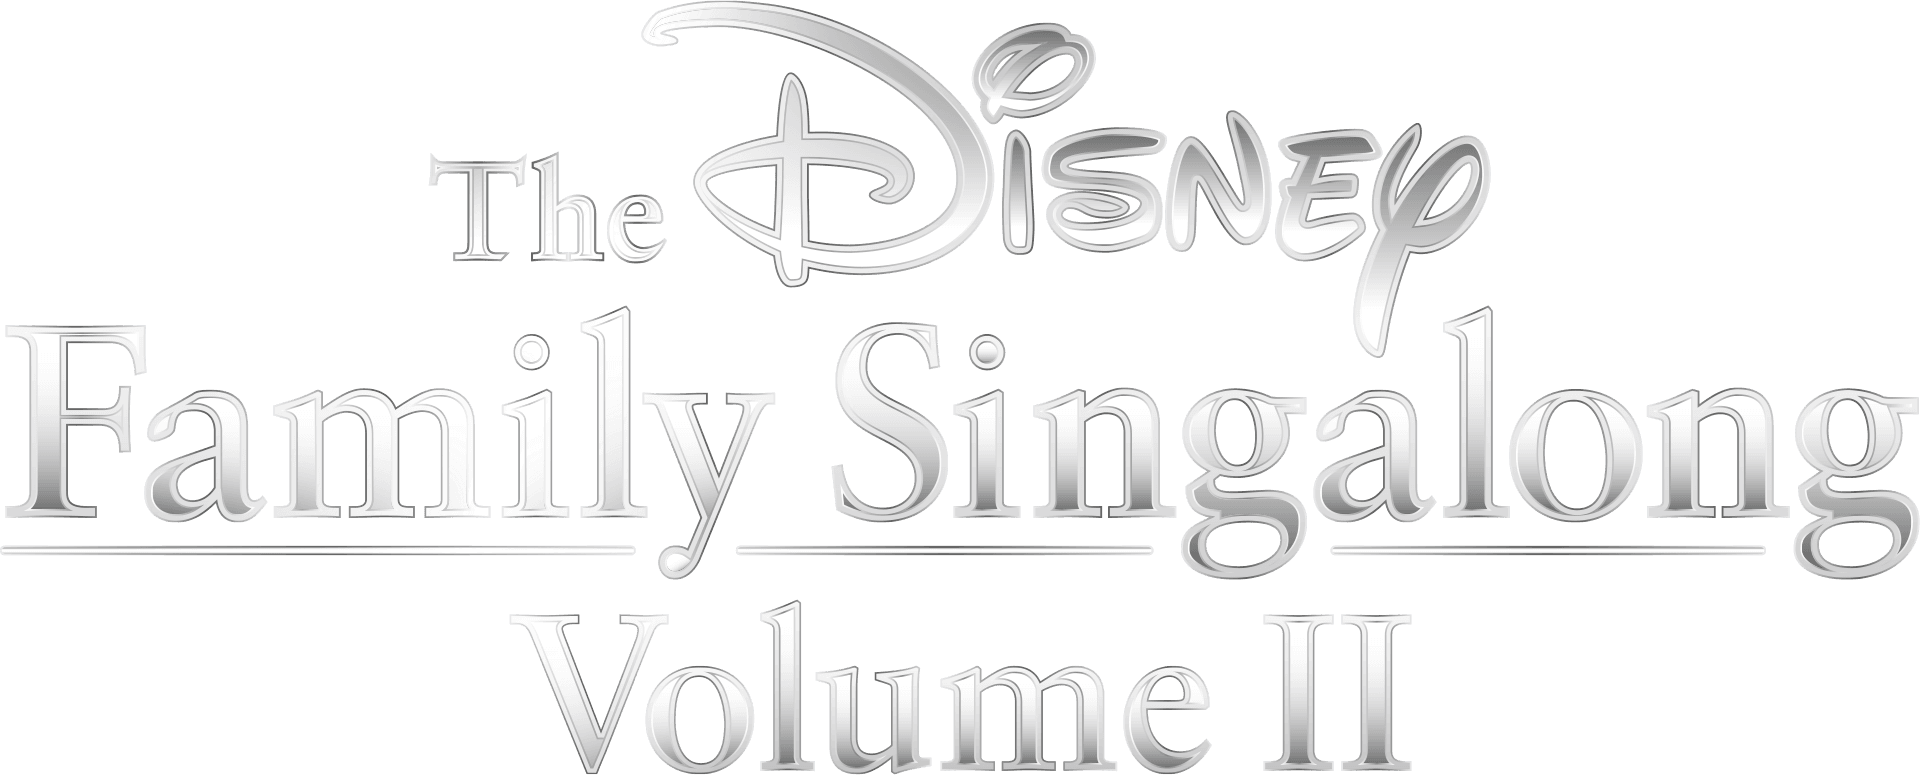 The Disney Family Singalong - Volume II logo